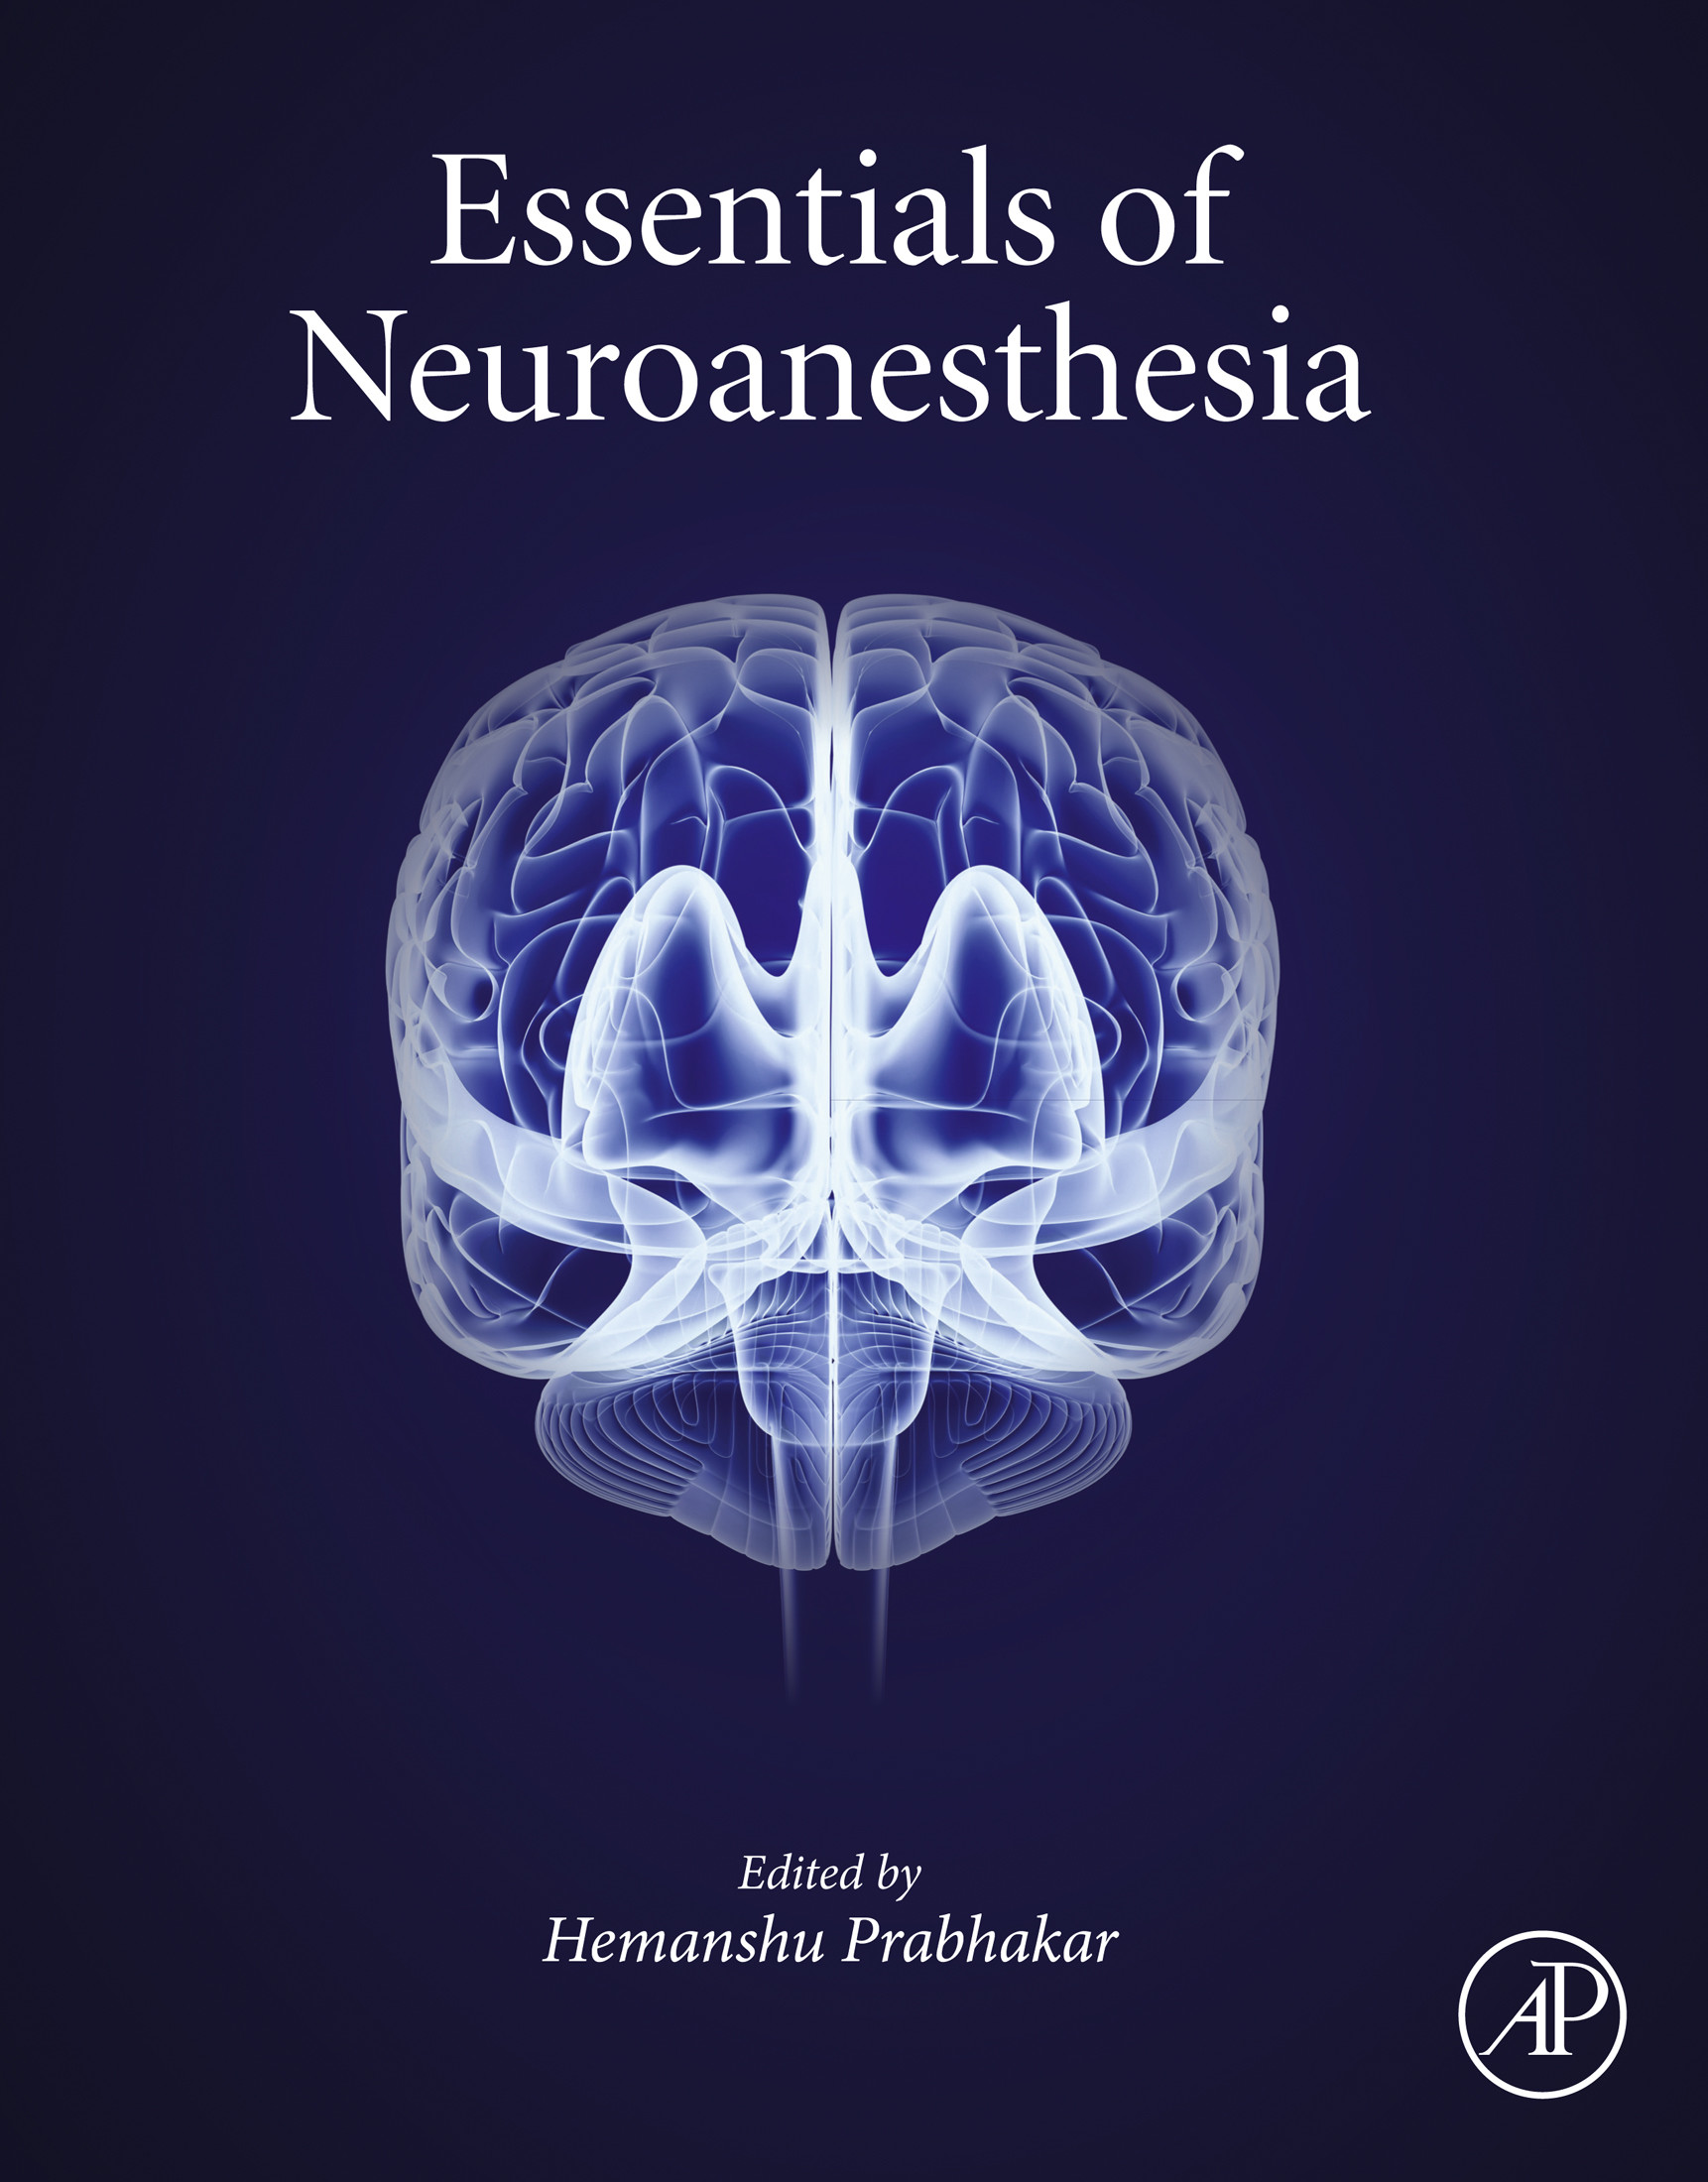 Cover Essentials of Neuroanesthesia